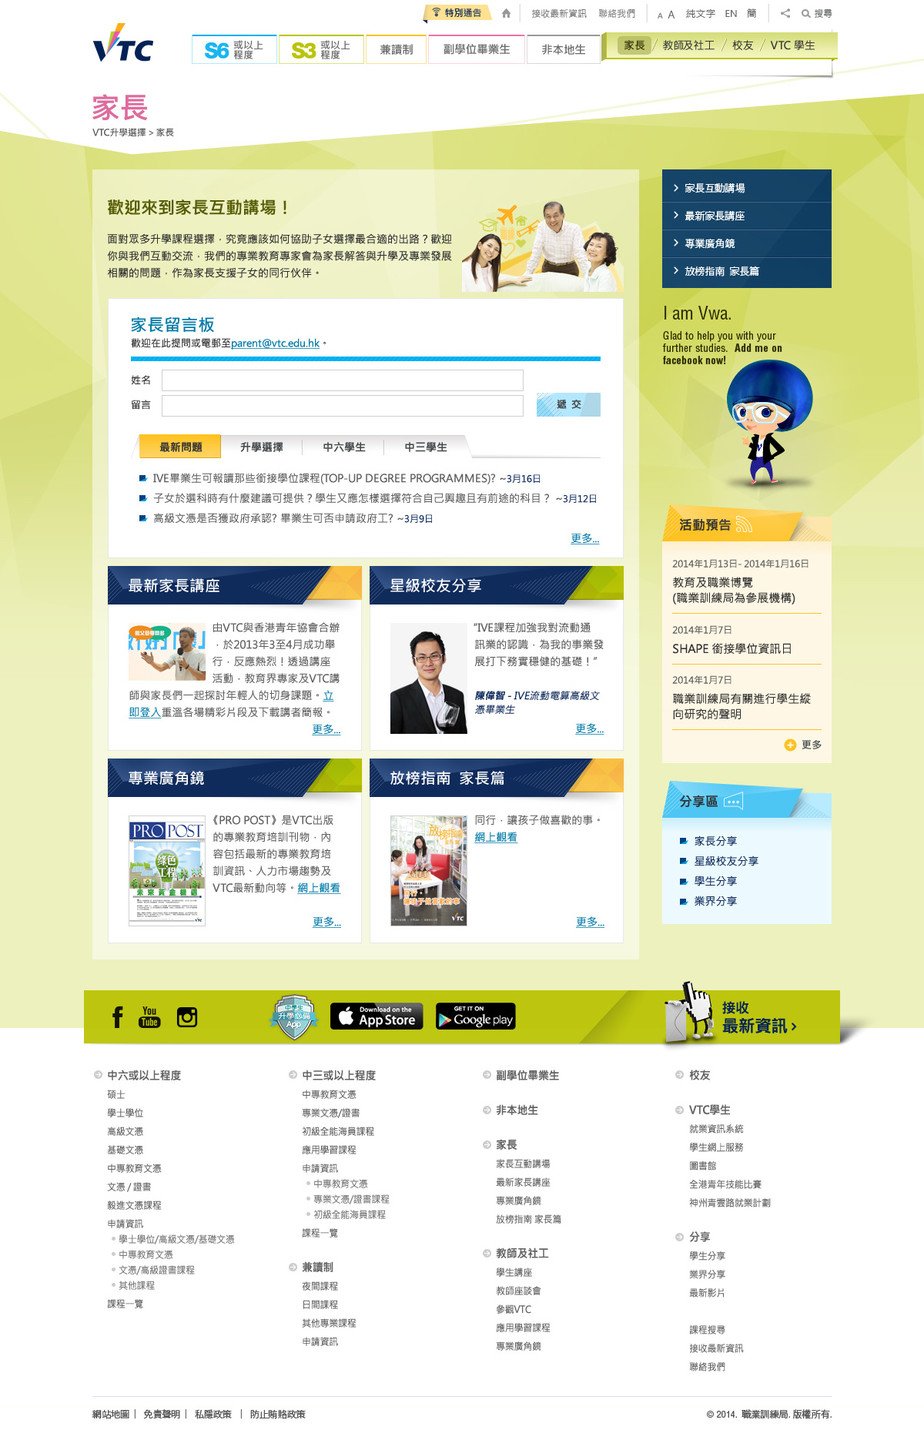 Vocational Training Council website screenshot for desktop version 4 of 8